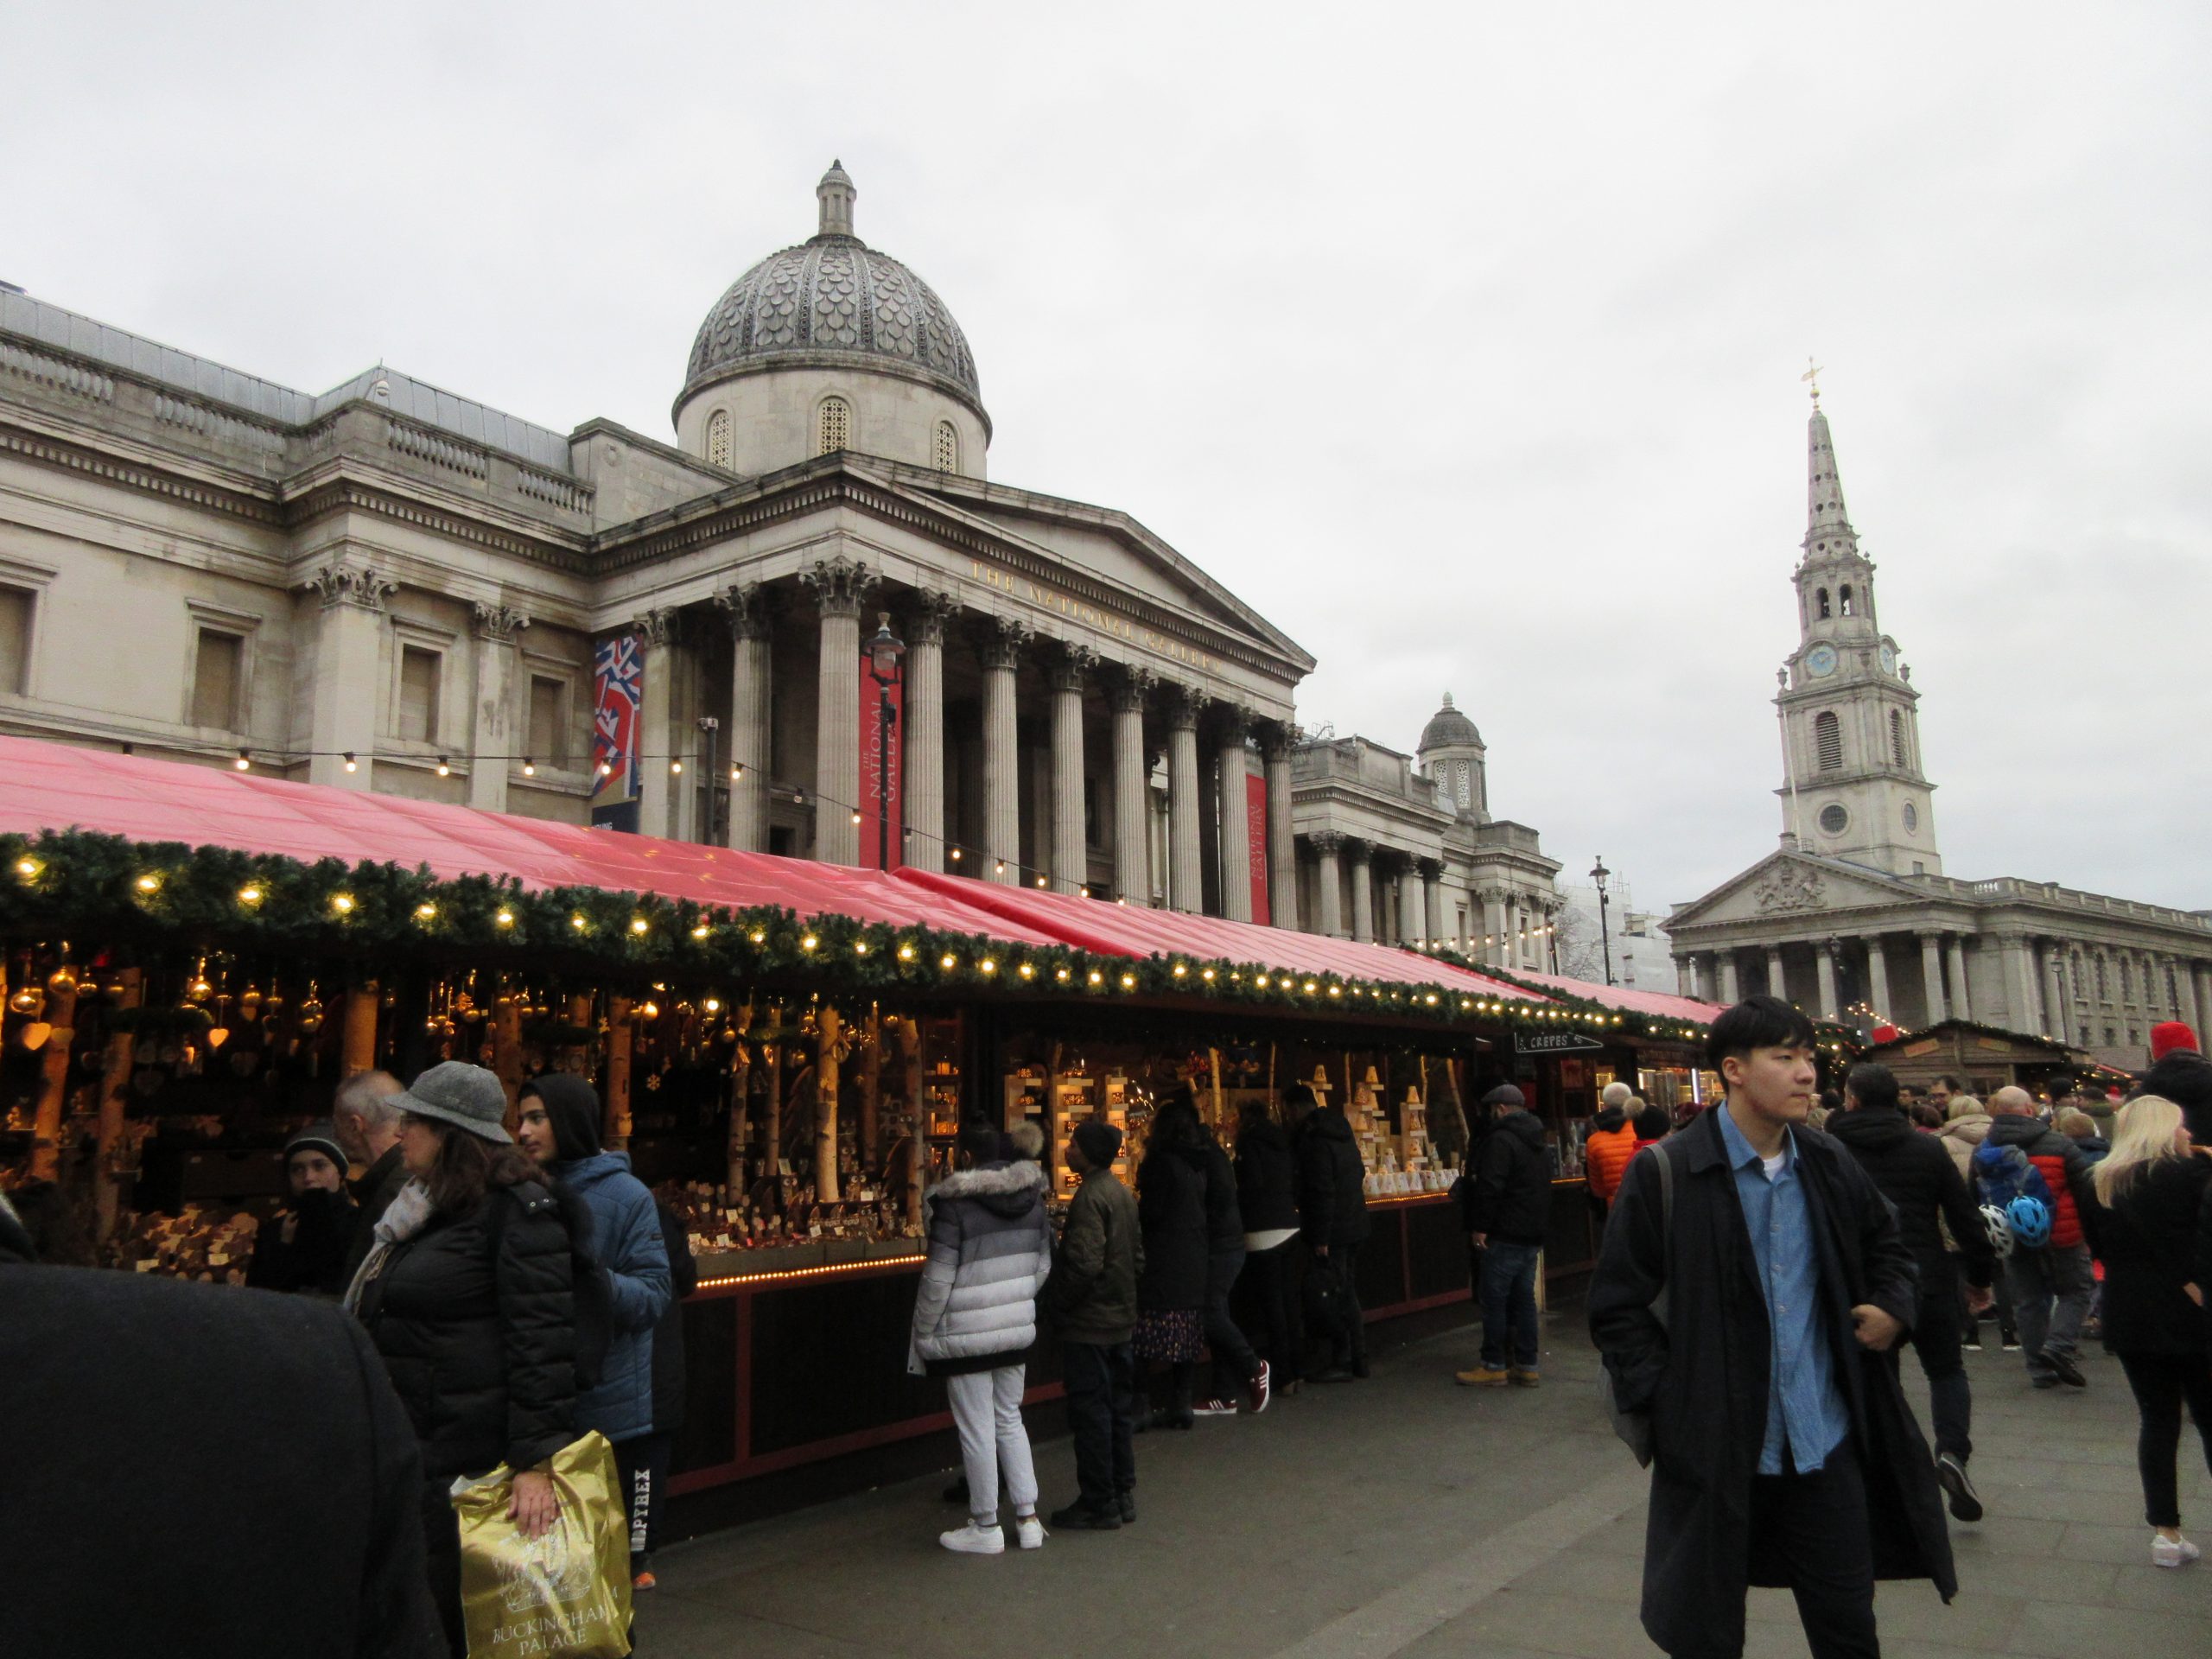 Christmas Market in Trafalgar Square - photo by Juliamaud